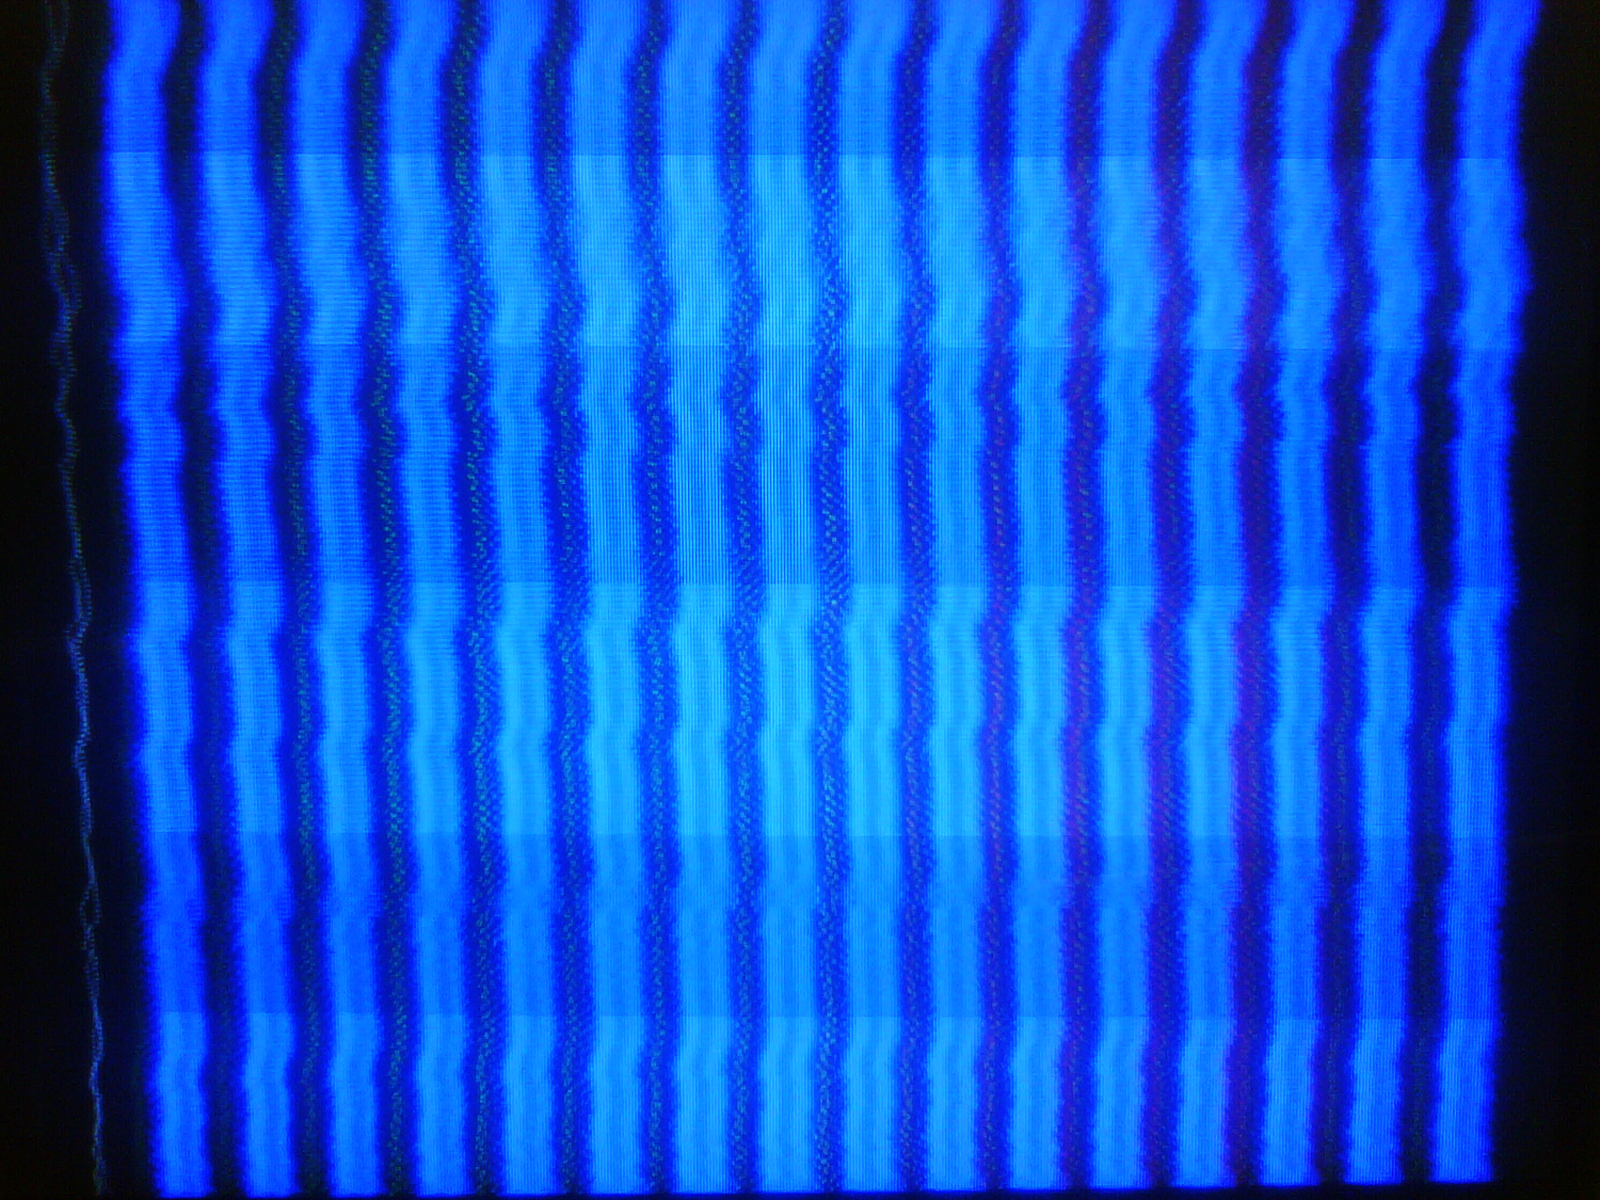 NTSC Video displaying blue lines